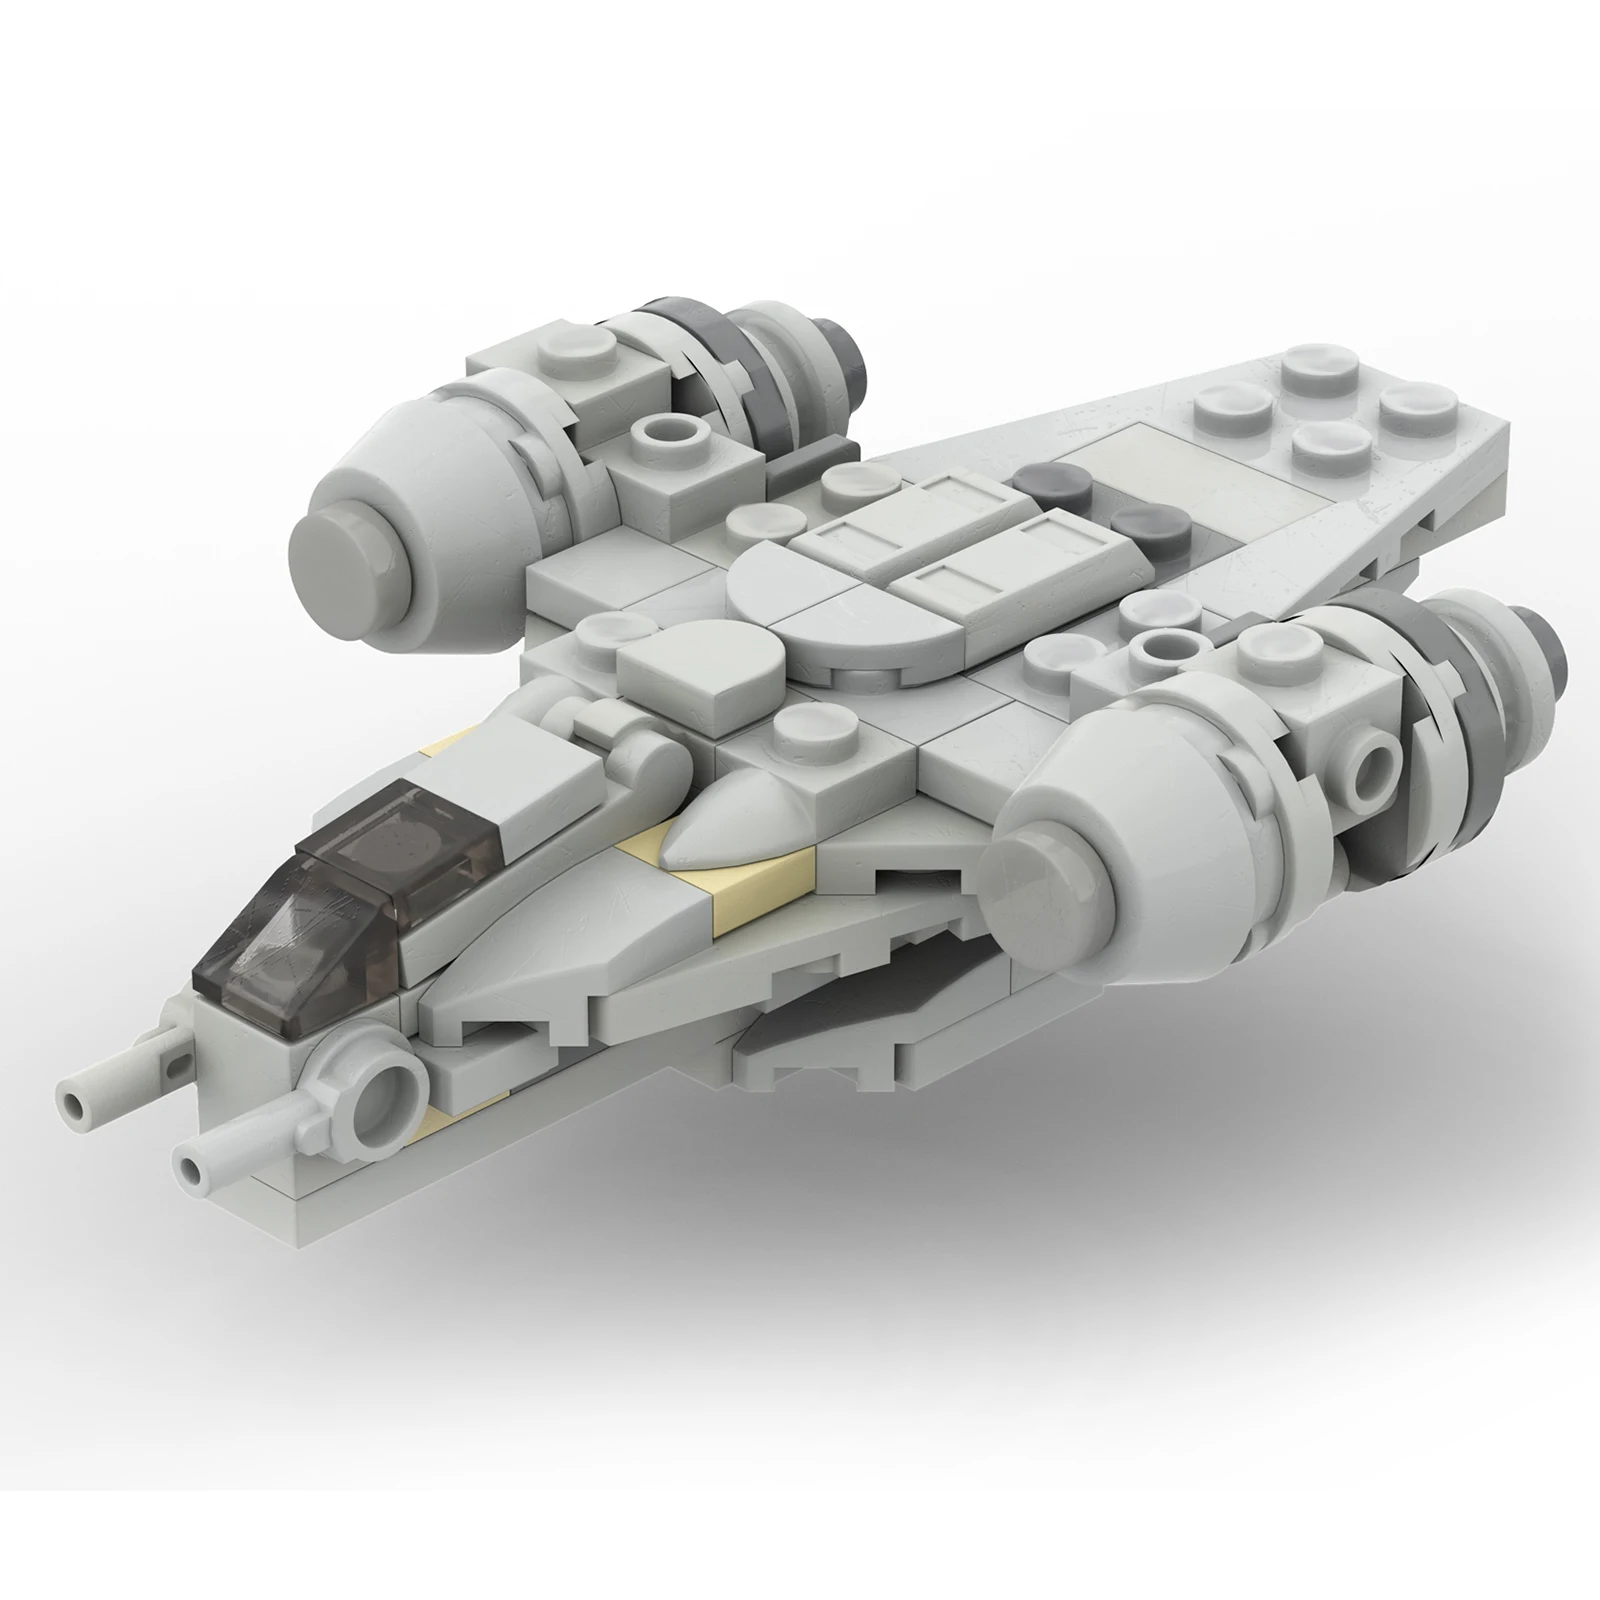 

Authorized MOC-38715 103Pcs Micro Razor Crest Spaceship Model Bricks Kit Building Blocks Set (Designed By Ron_mcphatty)